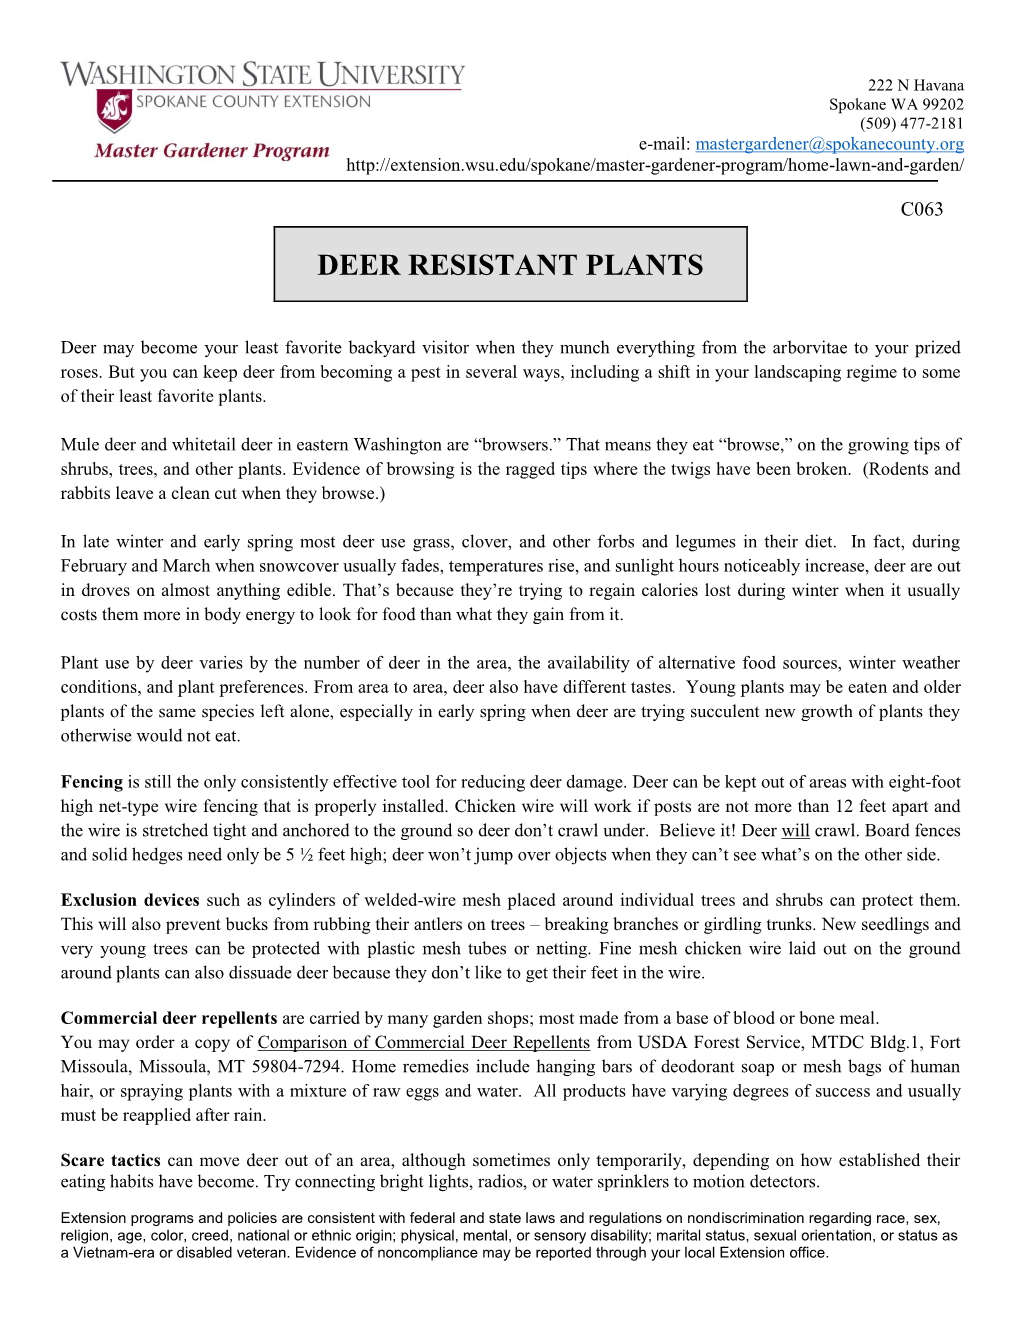 “Deer Resistant Plants”